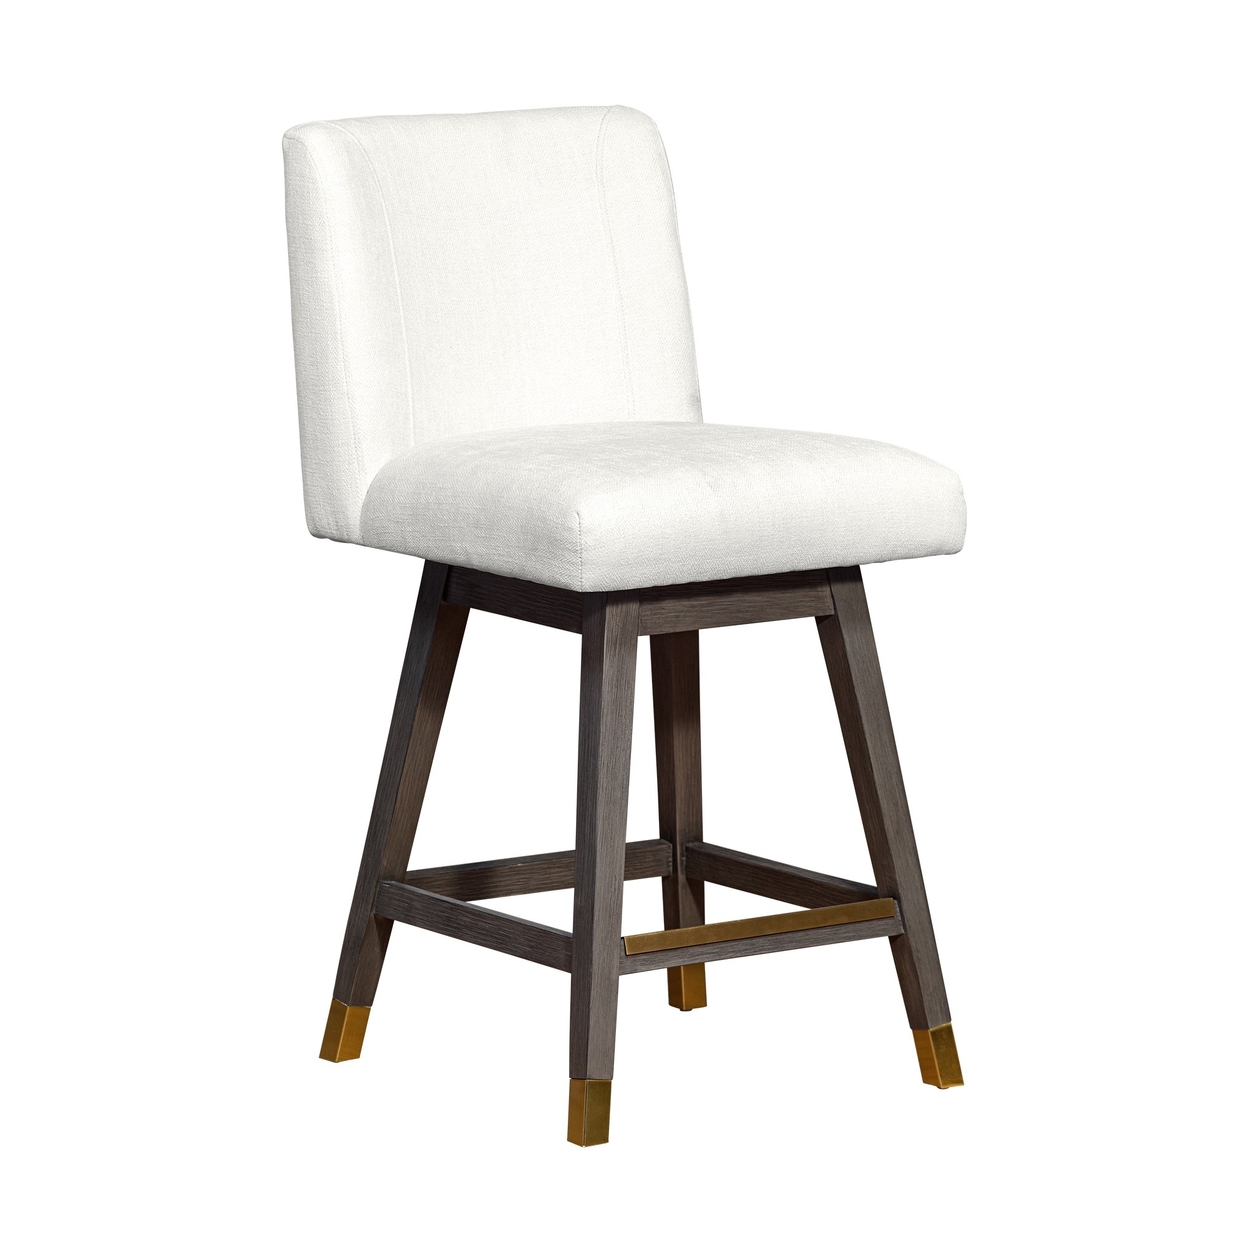 Lia 26 Inch Swivel Counter Stool Chair, Gray Wood, Cream White Polyester- Saltoro Sherpi